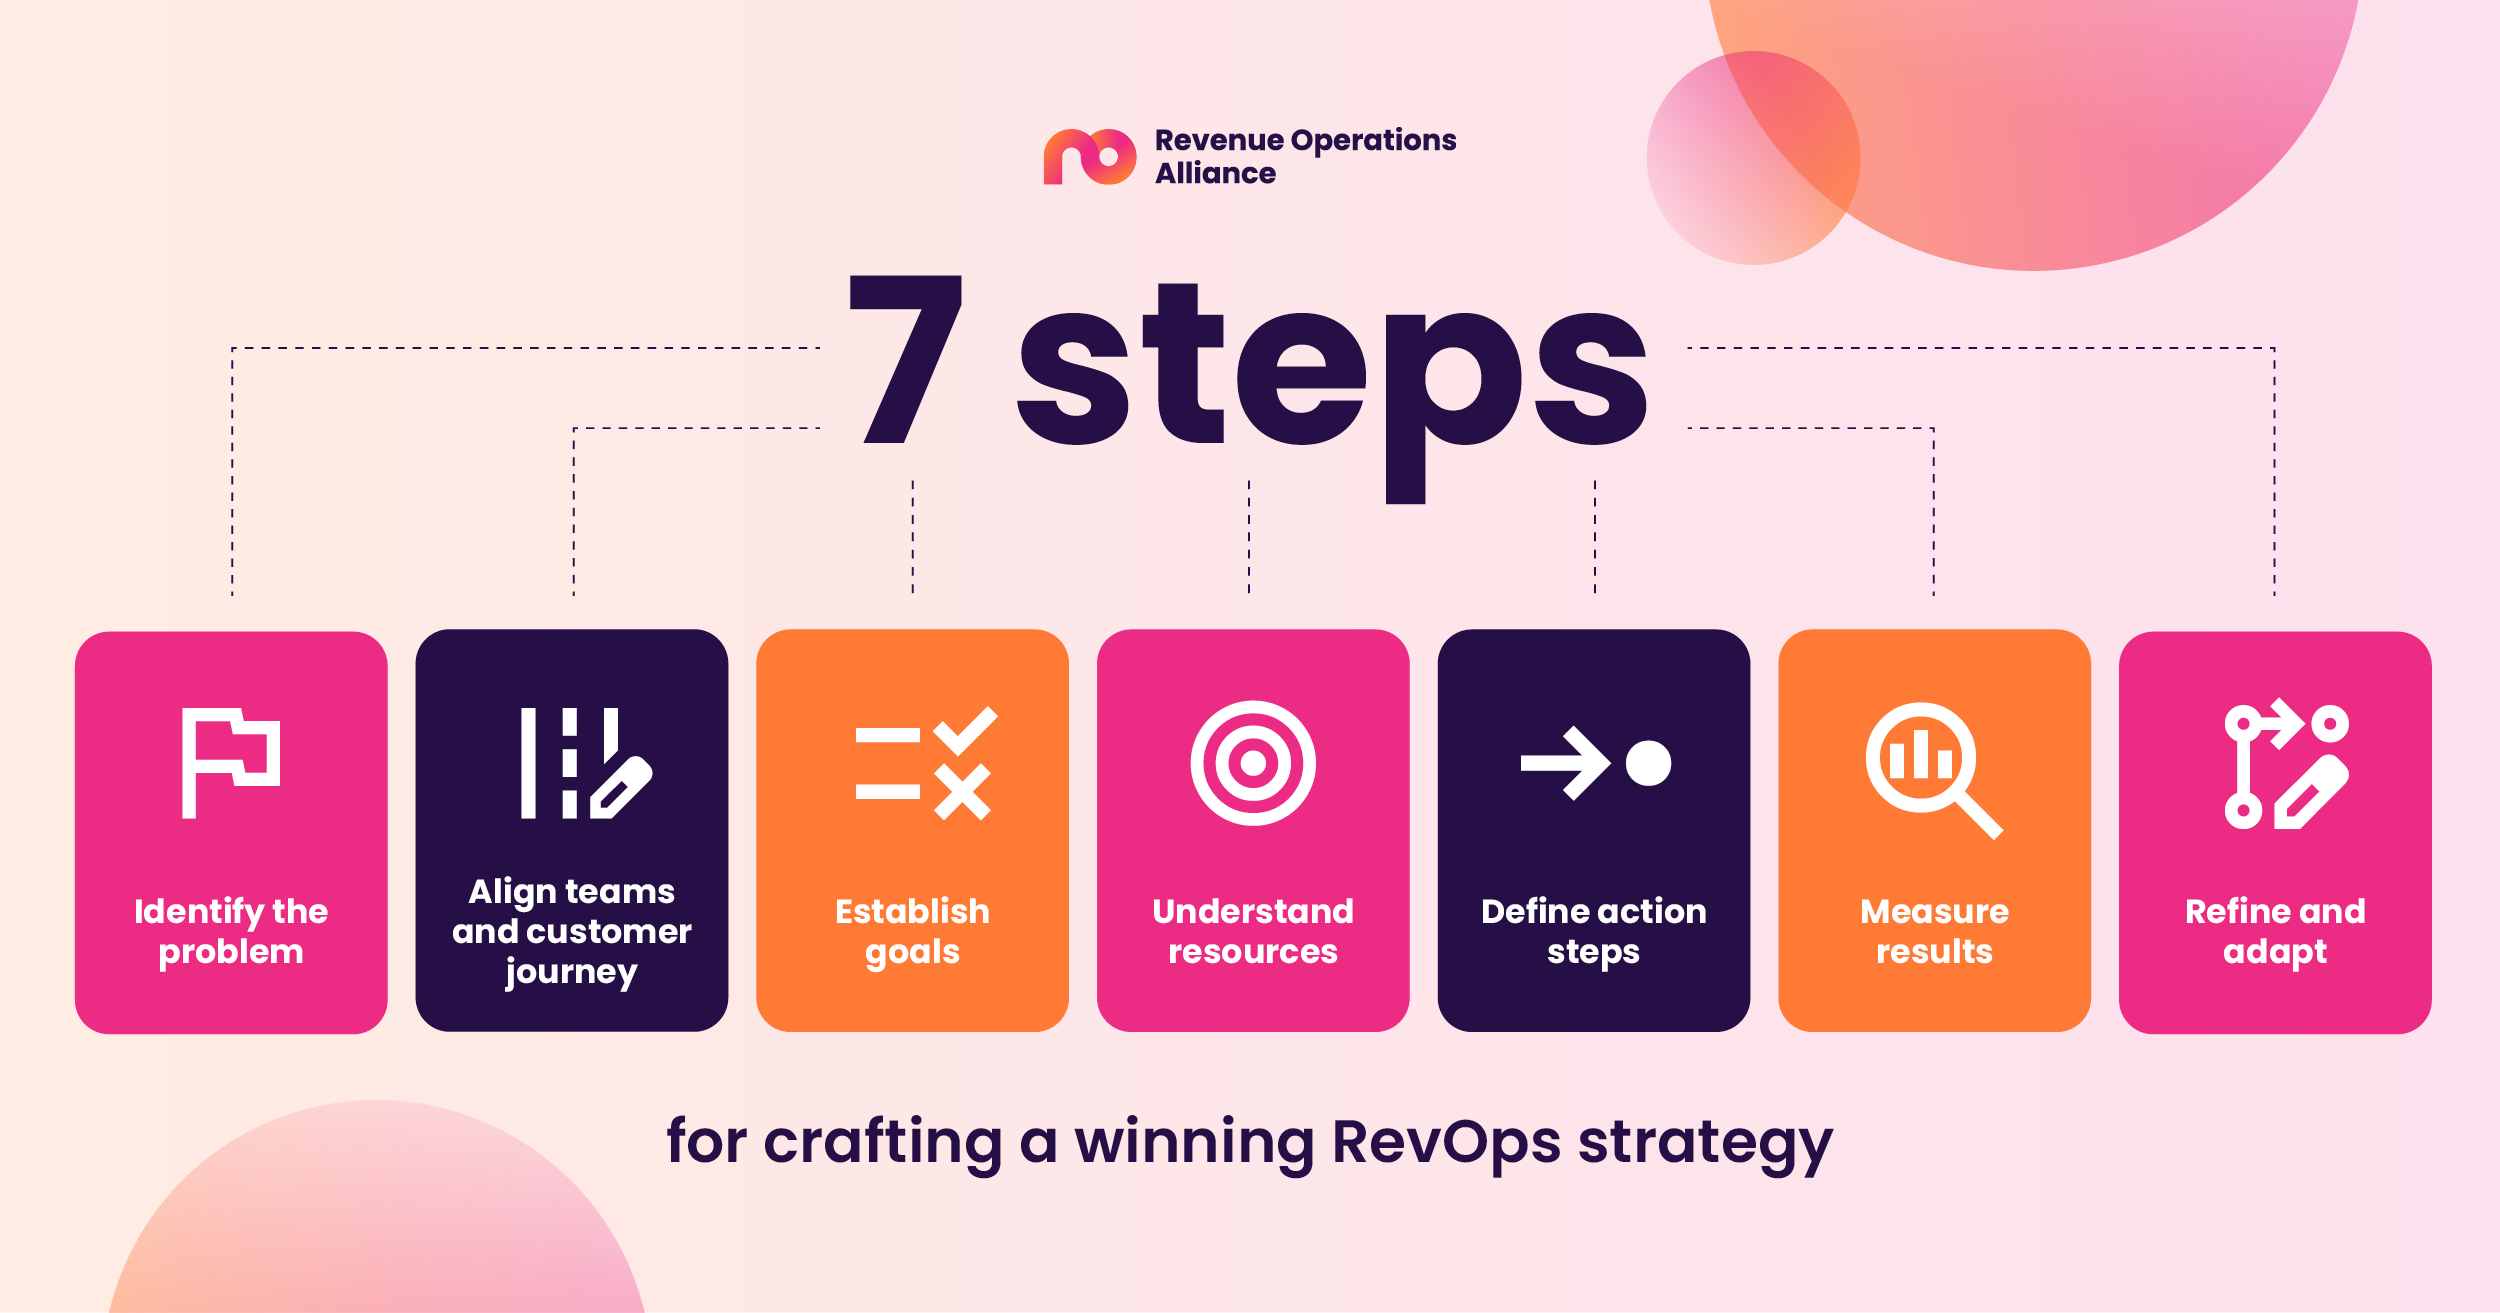 7 steps for crafting a winning RevOps stratgey